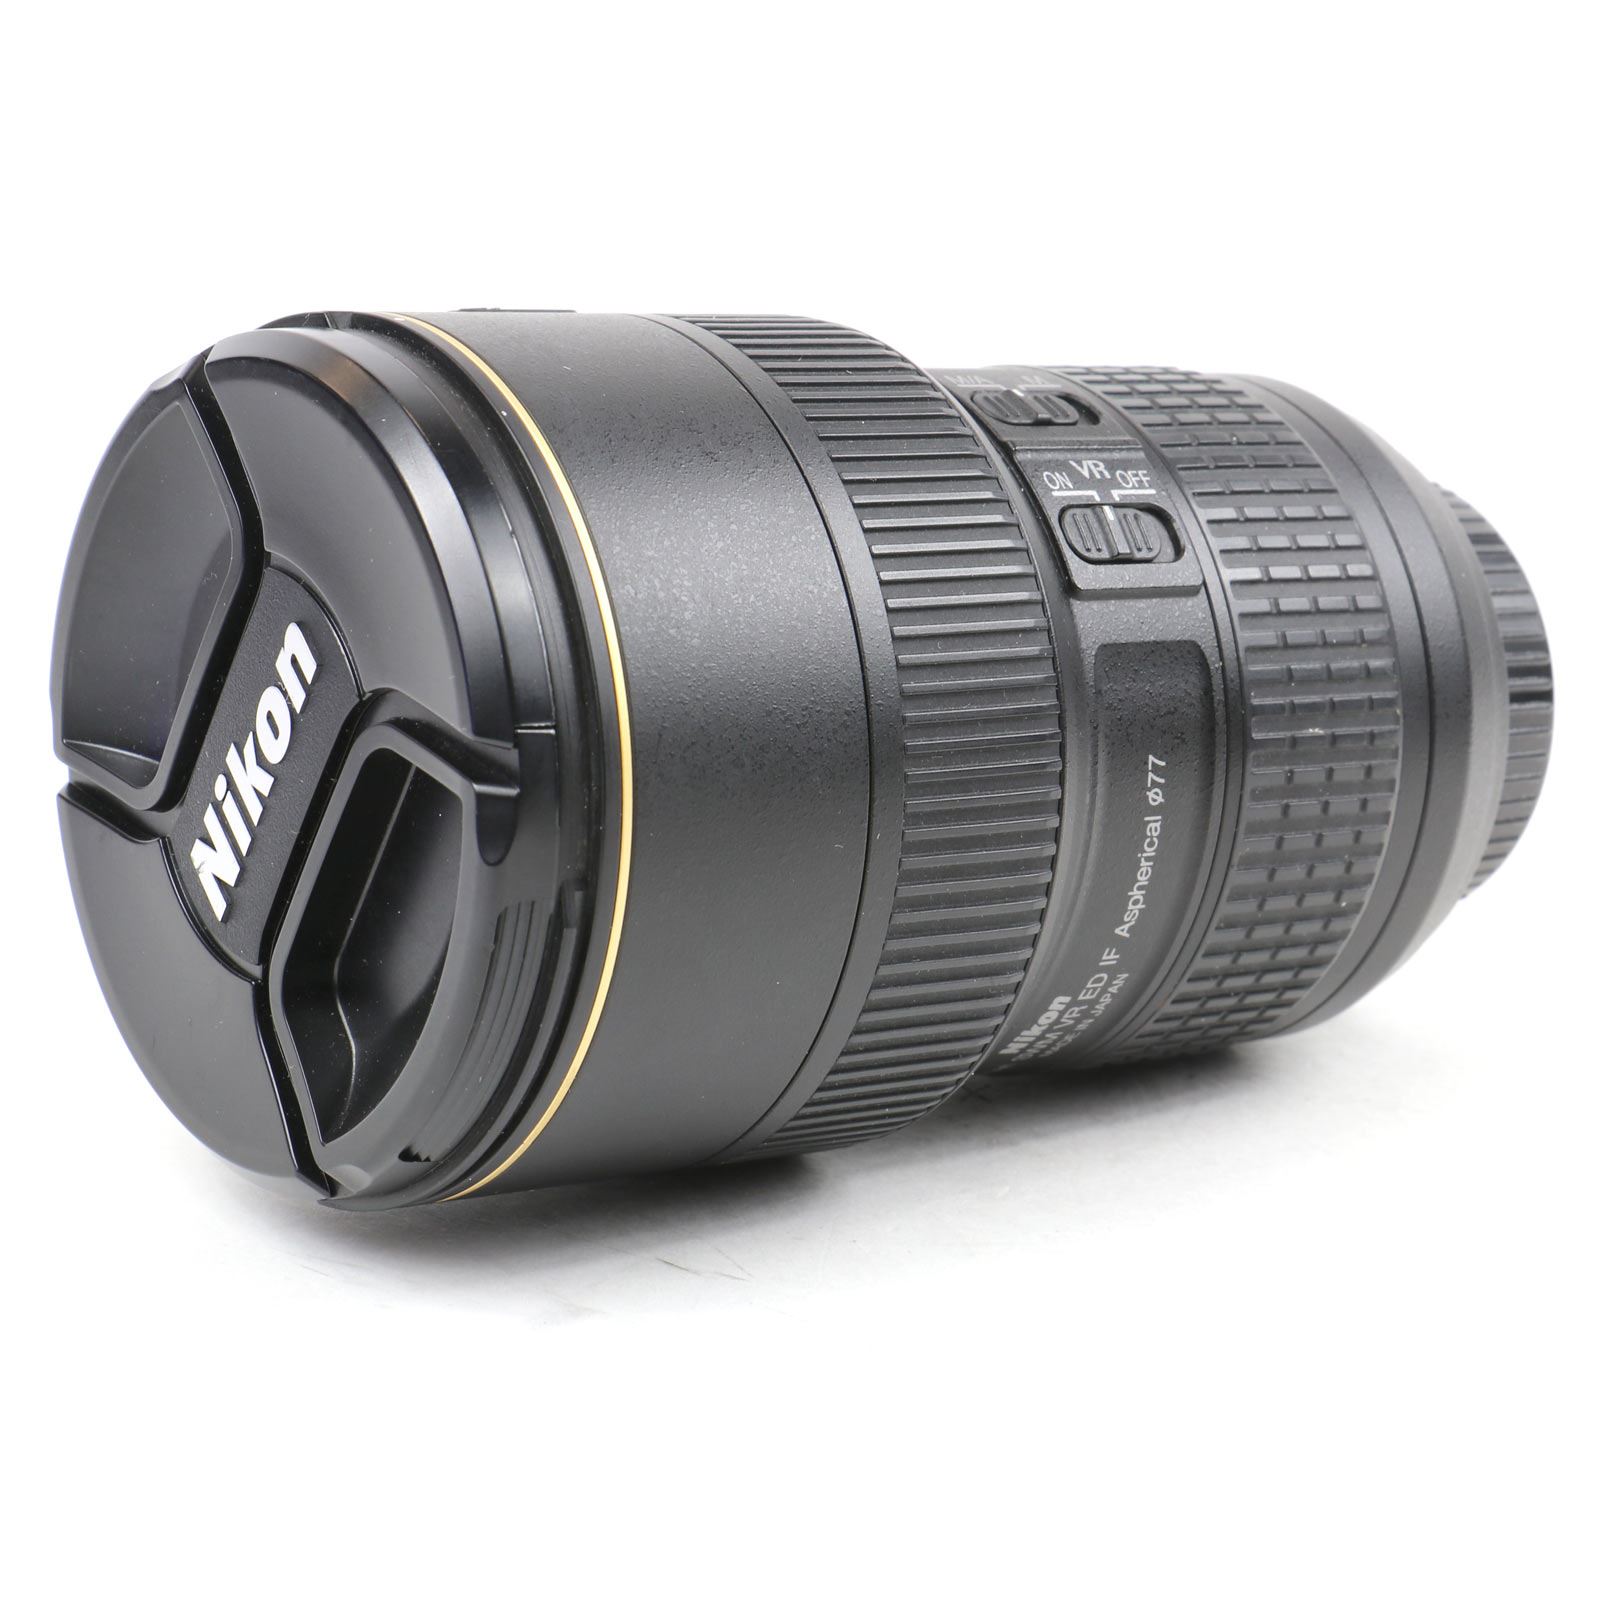 Nikon 1635mm f4 G AFS ED VR Lens Wex Photo Video